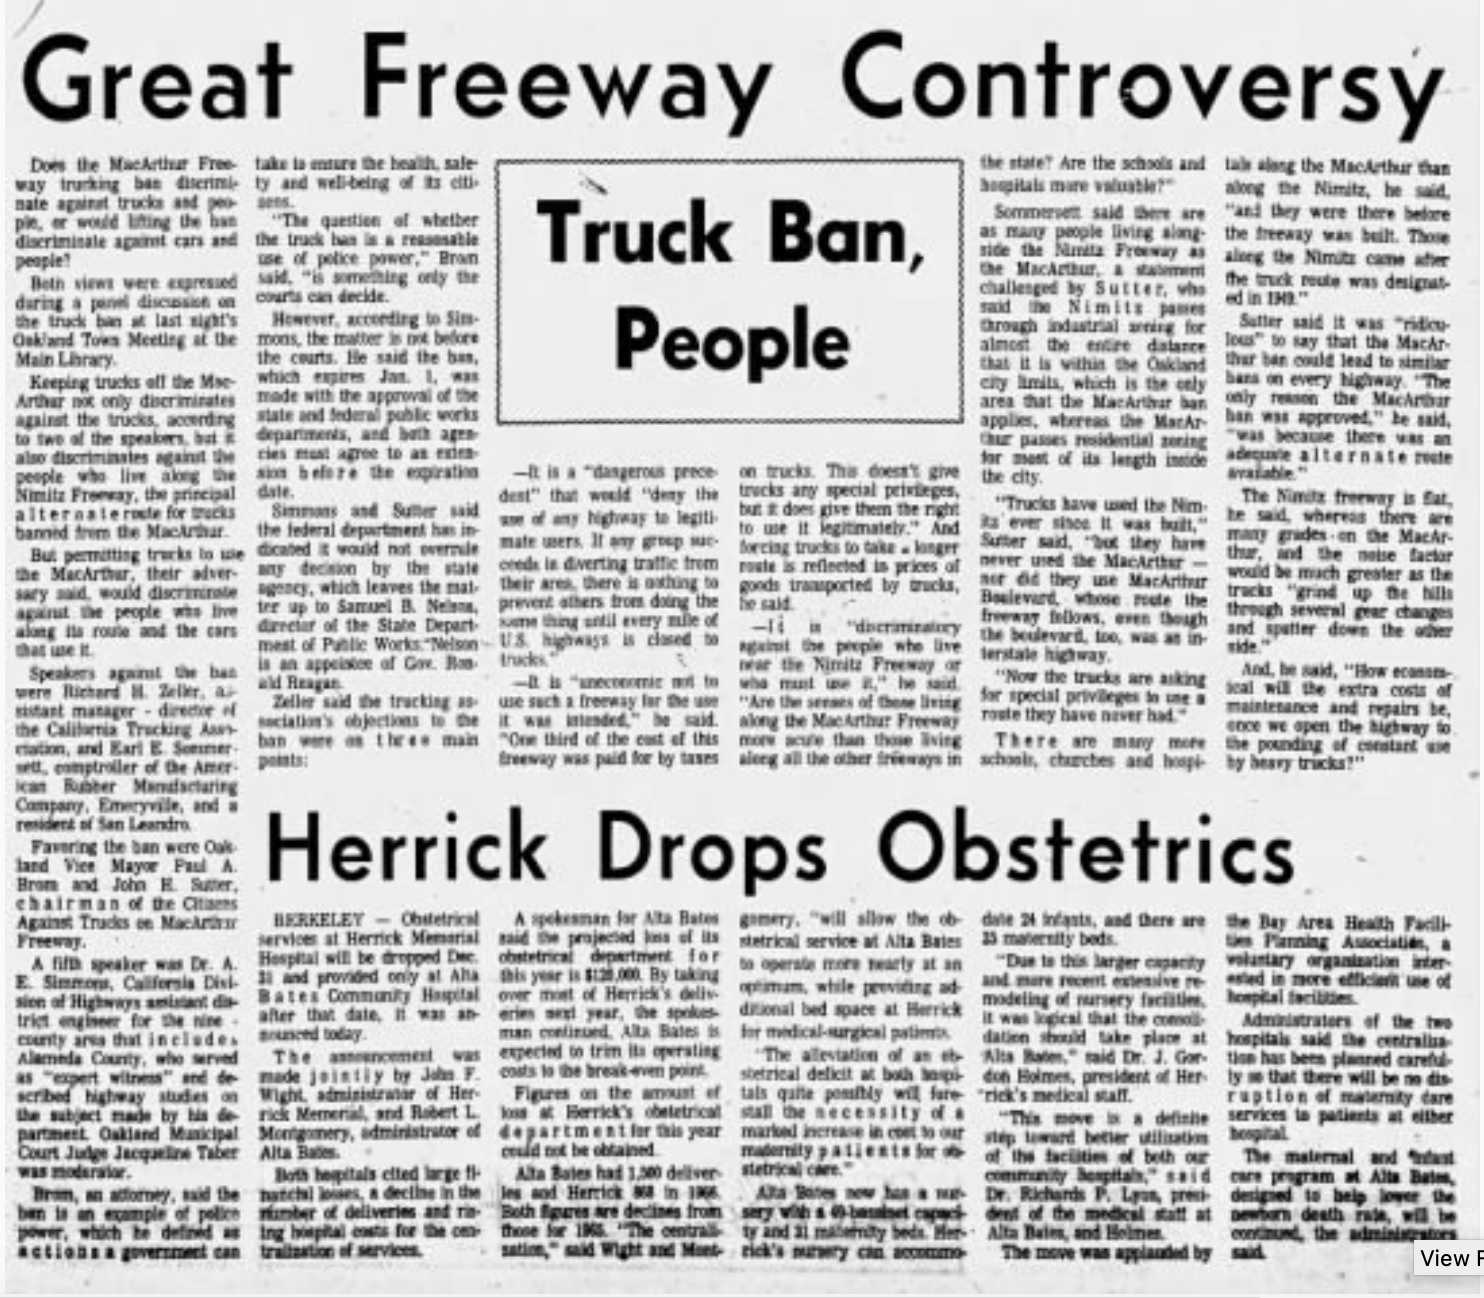 Oakland Tribune article from November 14, 1967